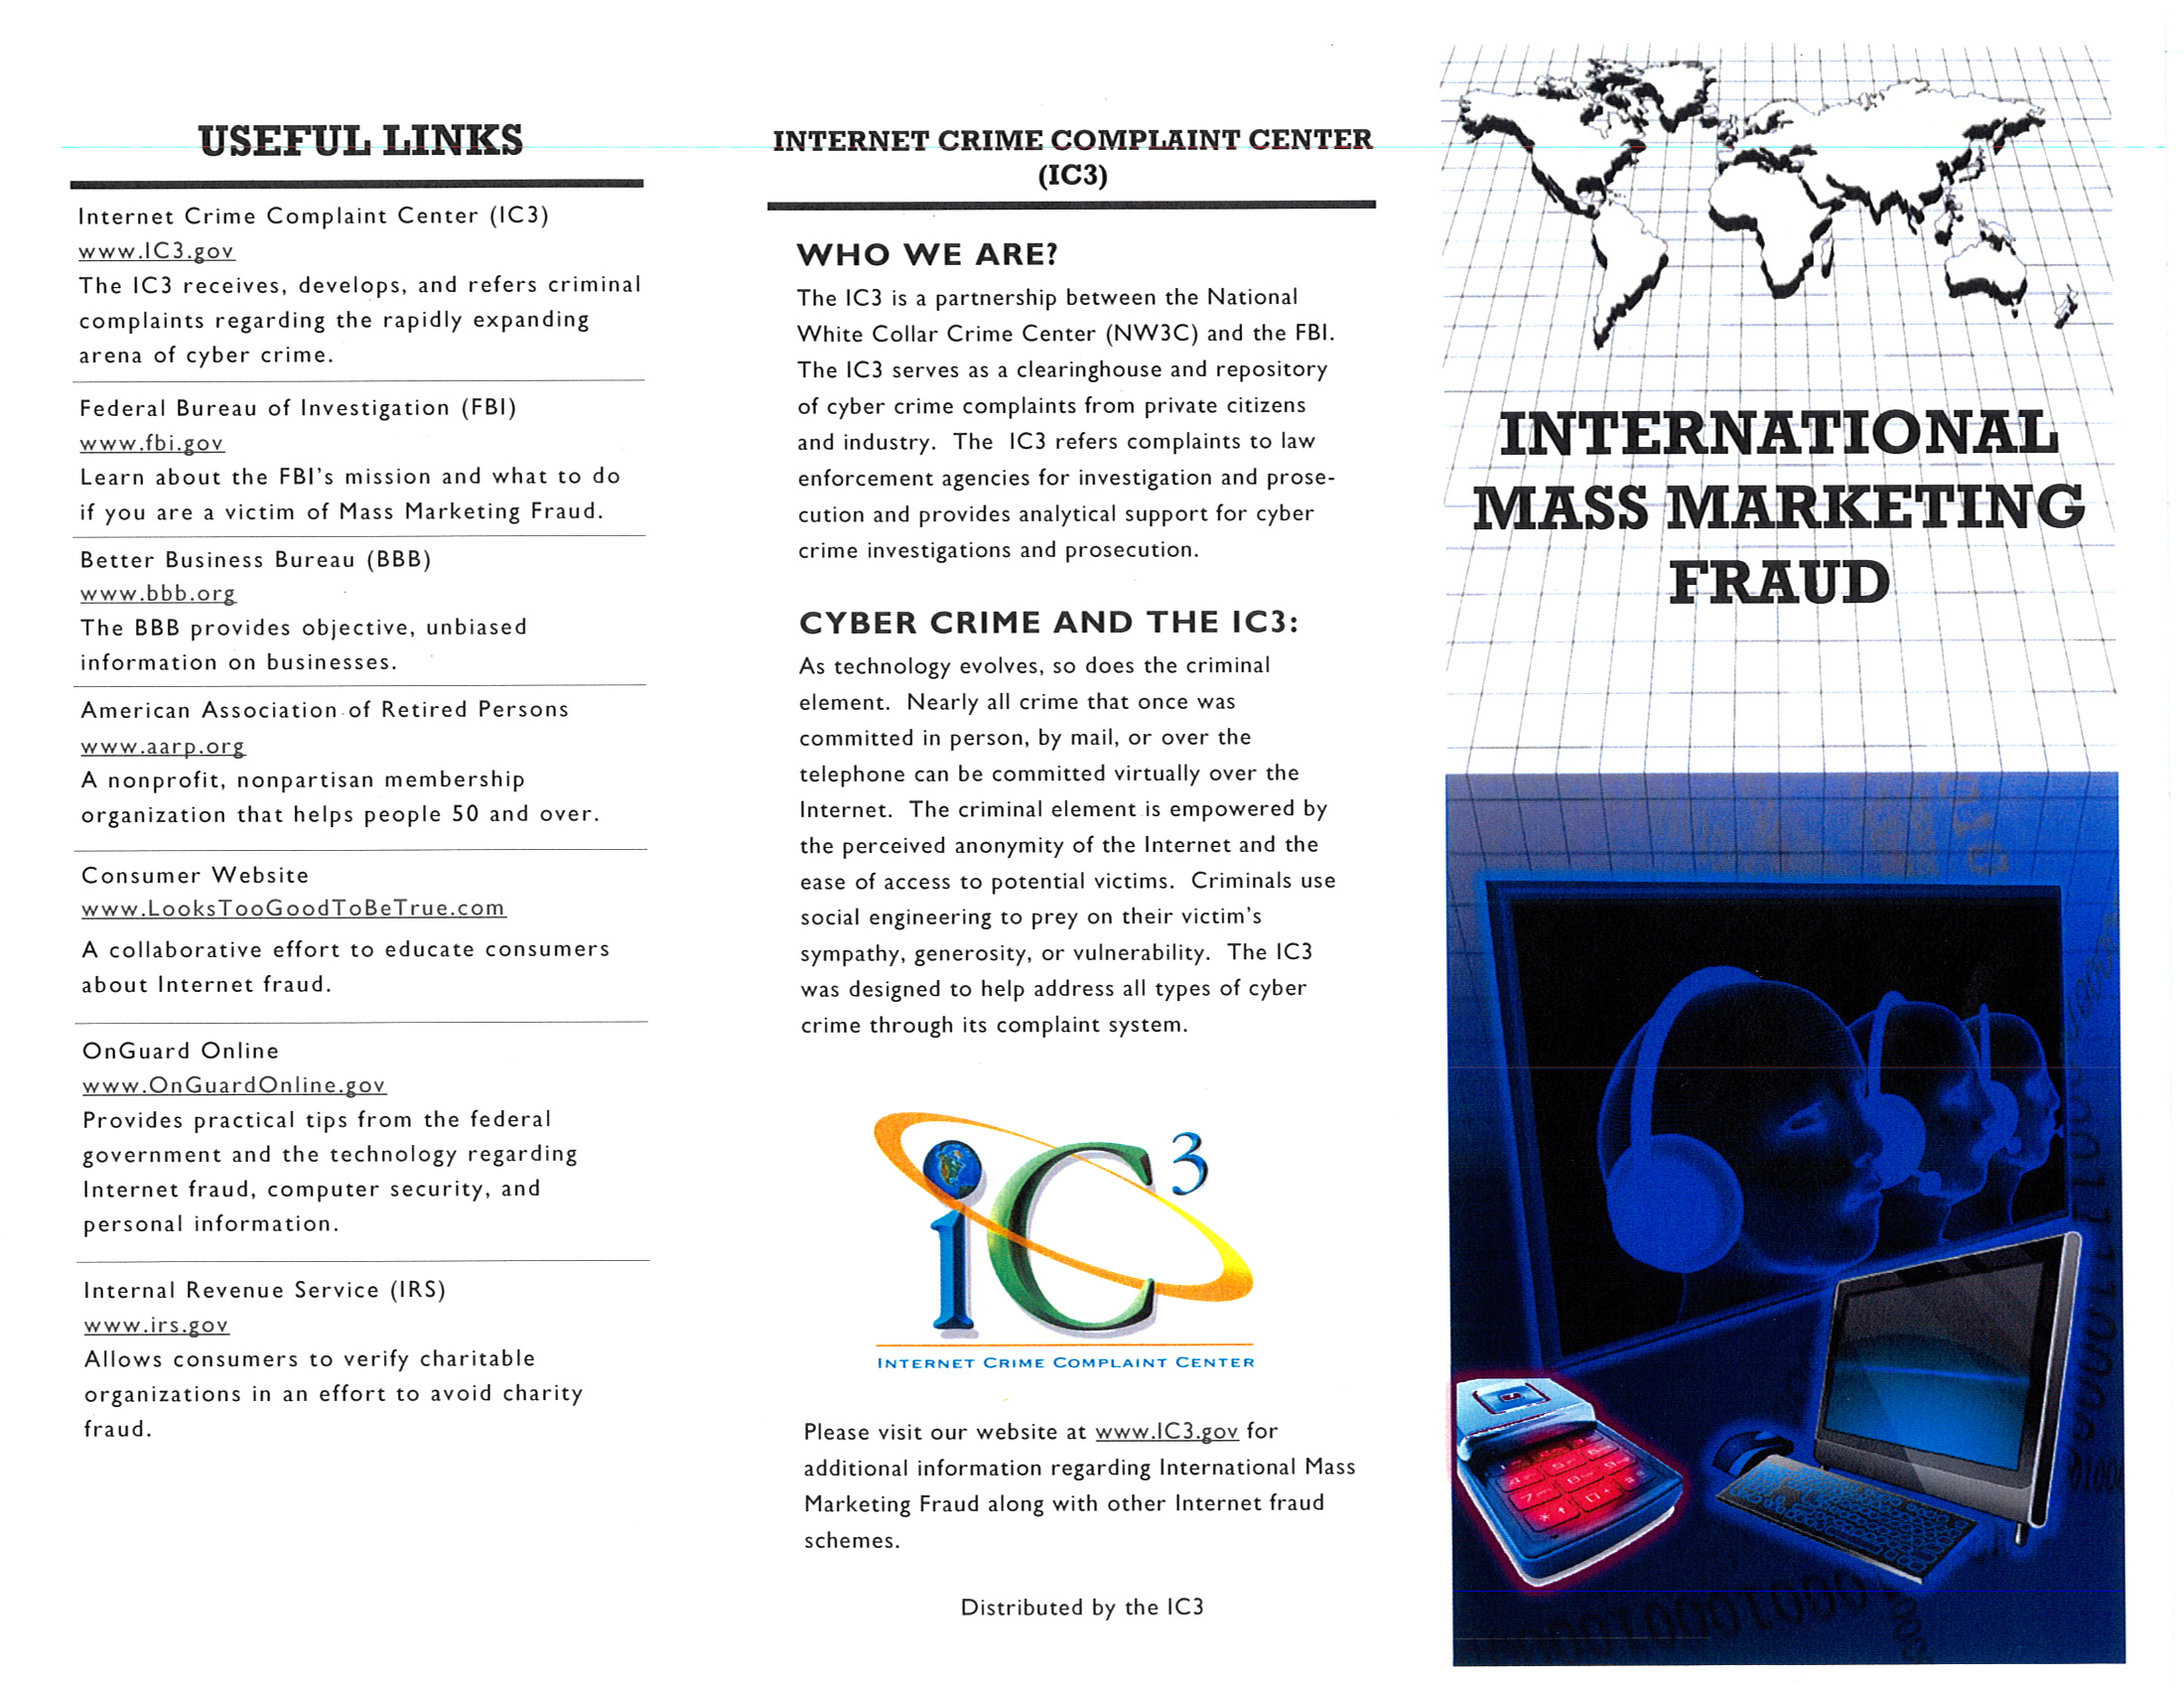 International Mass Marketing Fraud Page 1